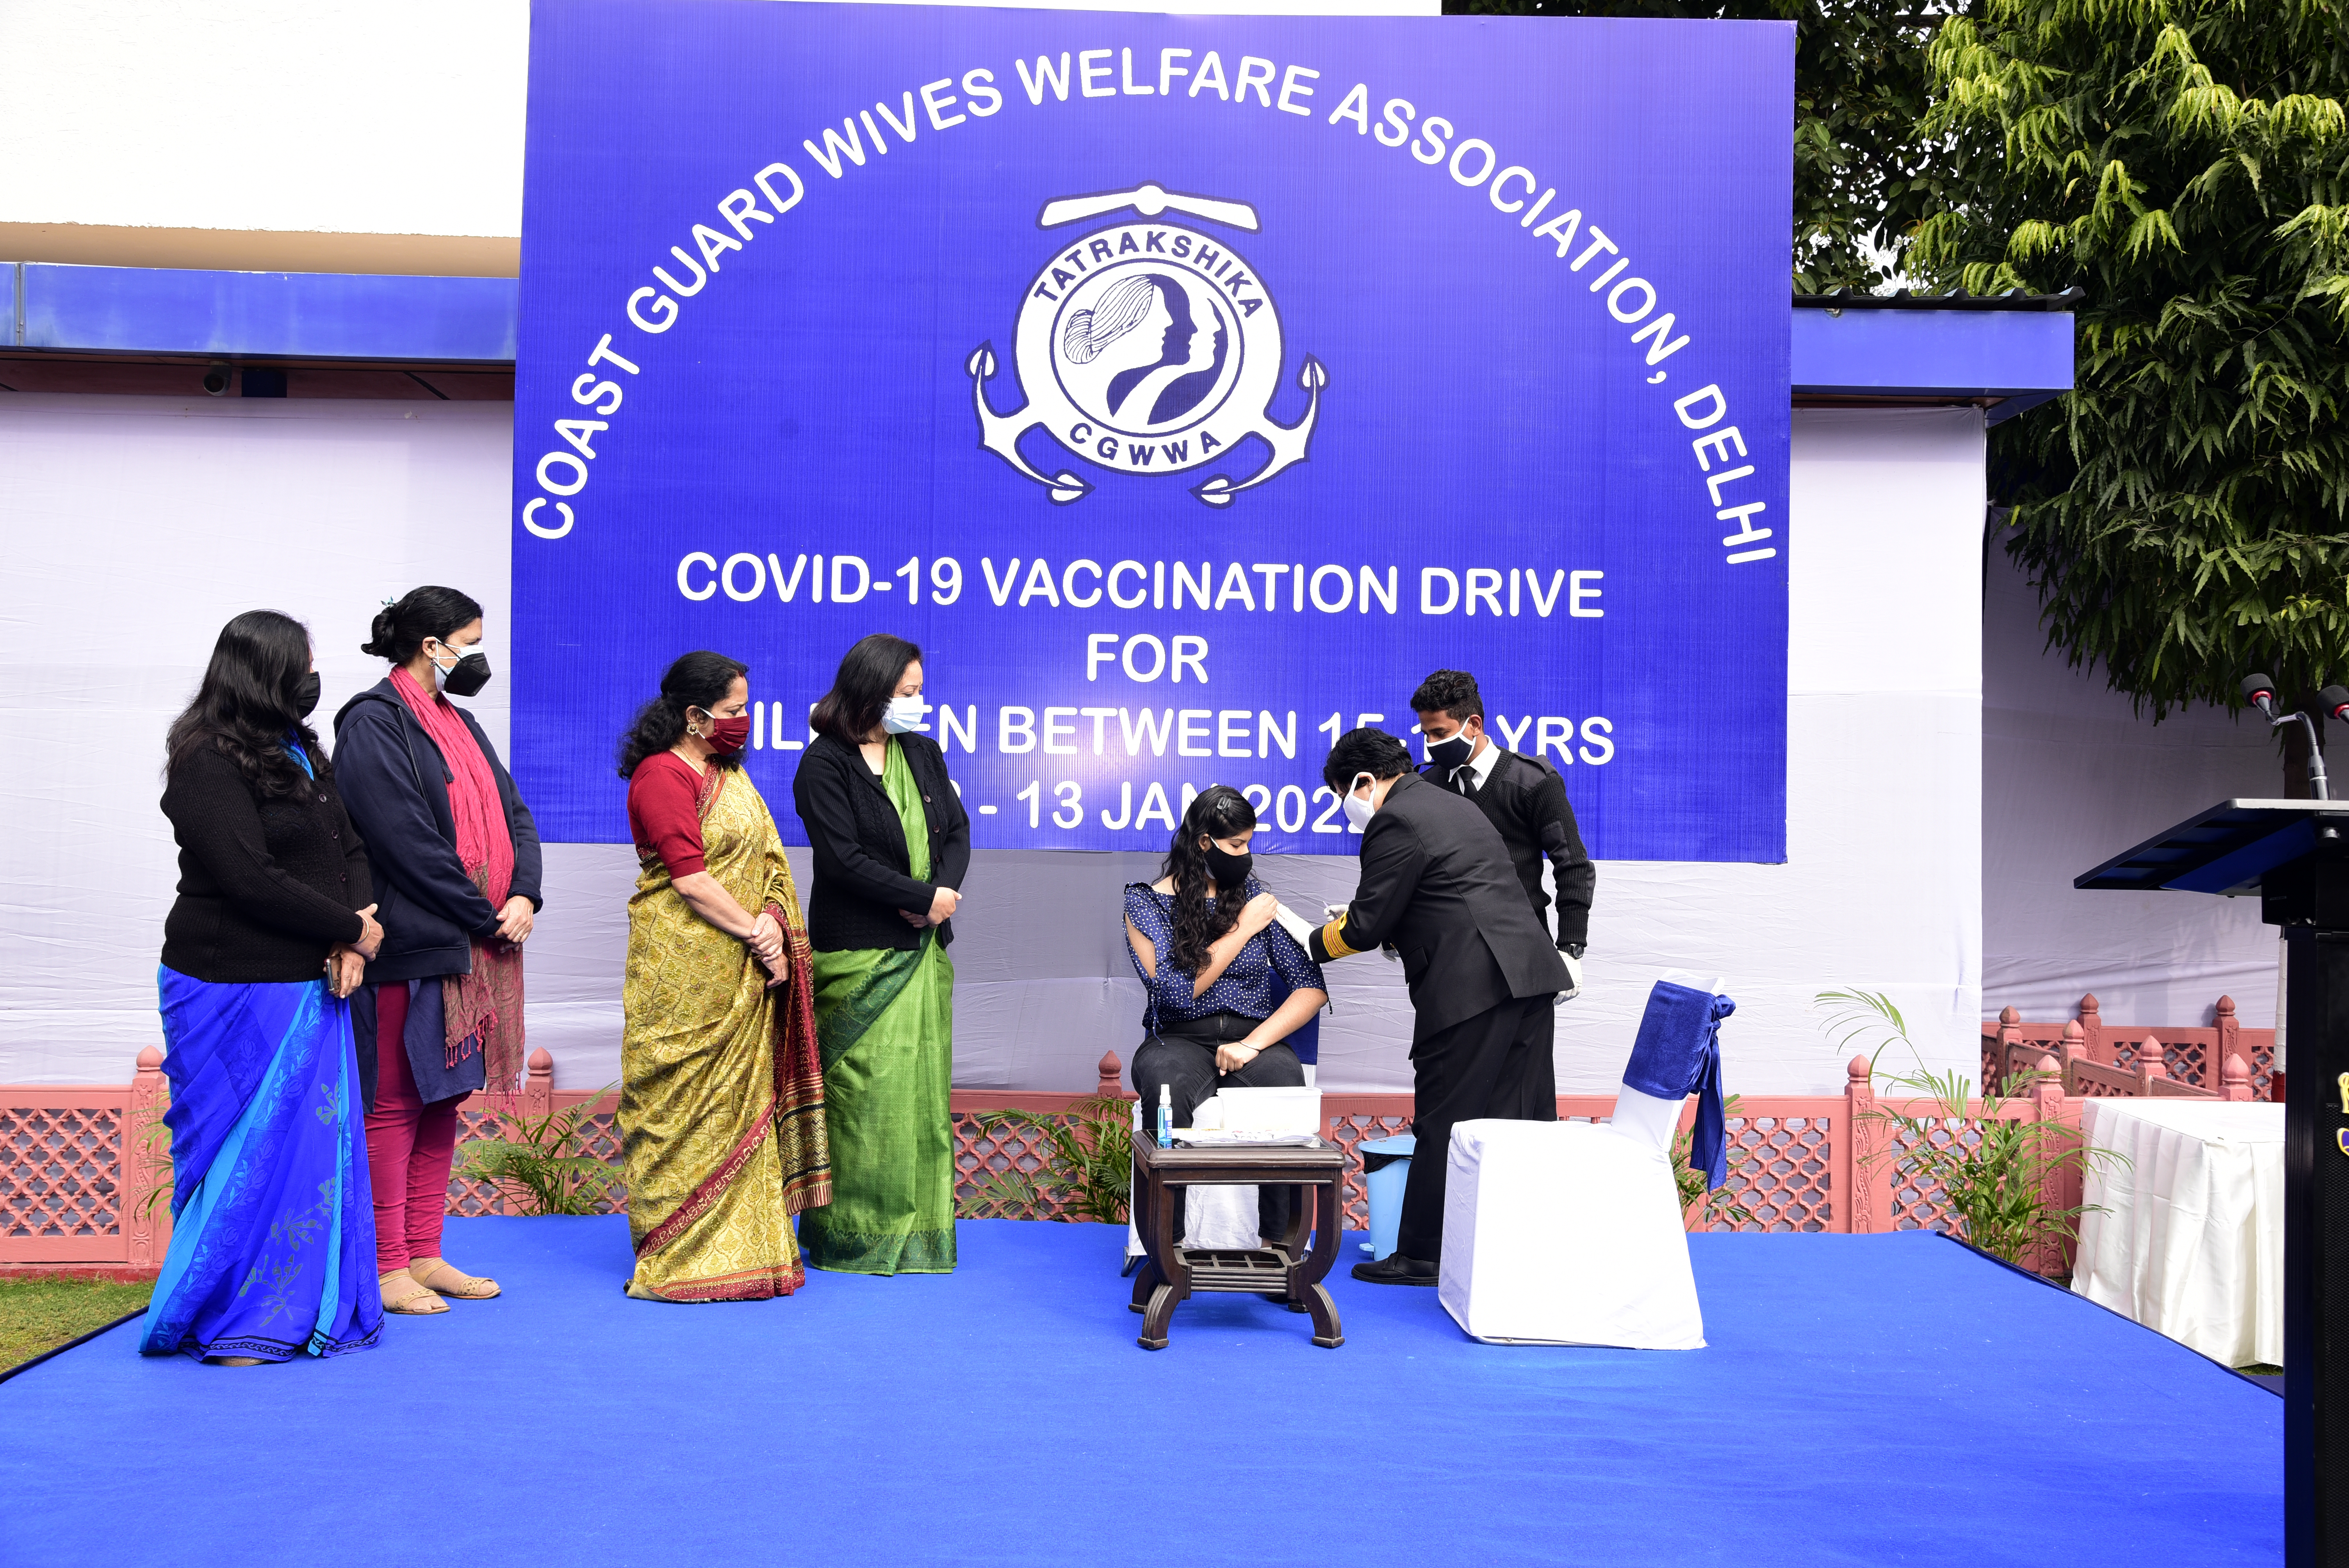 CGWWA Vaccination Drive